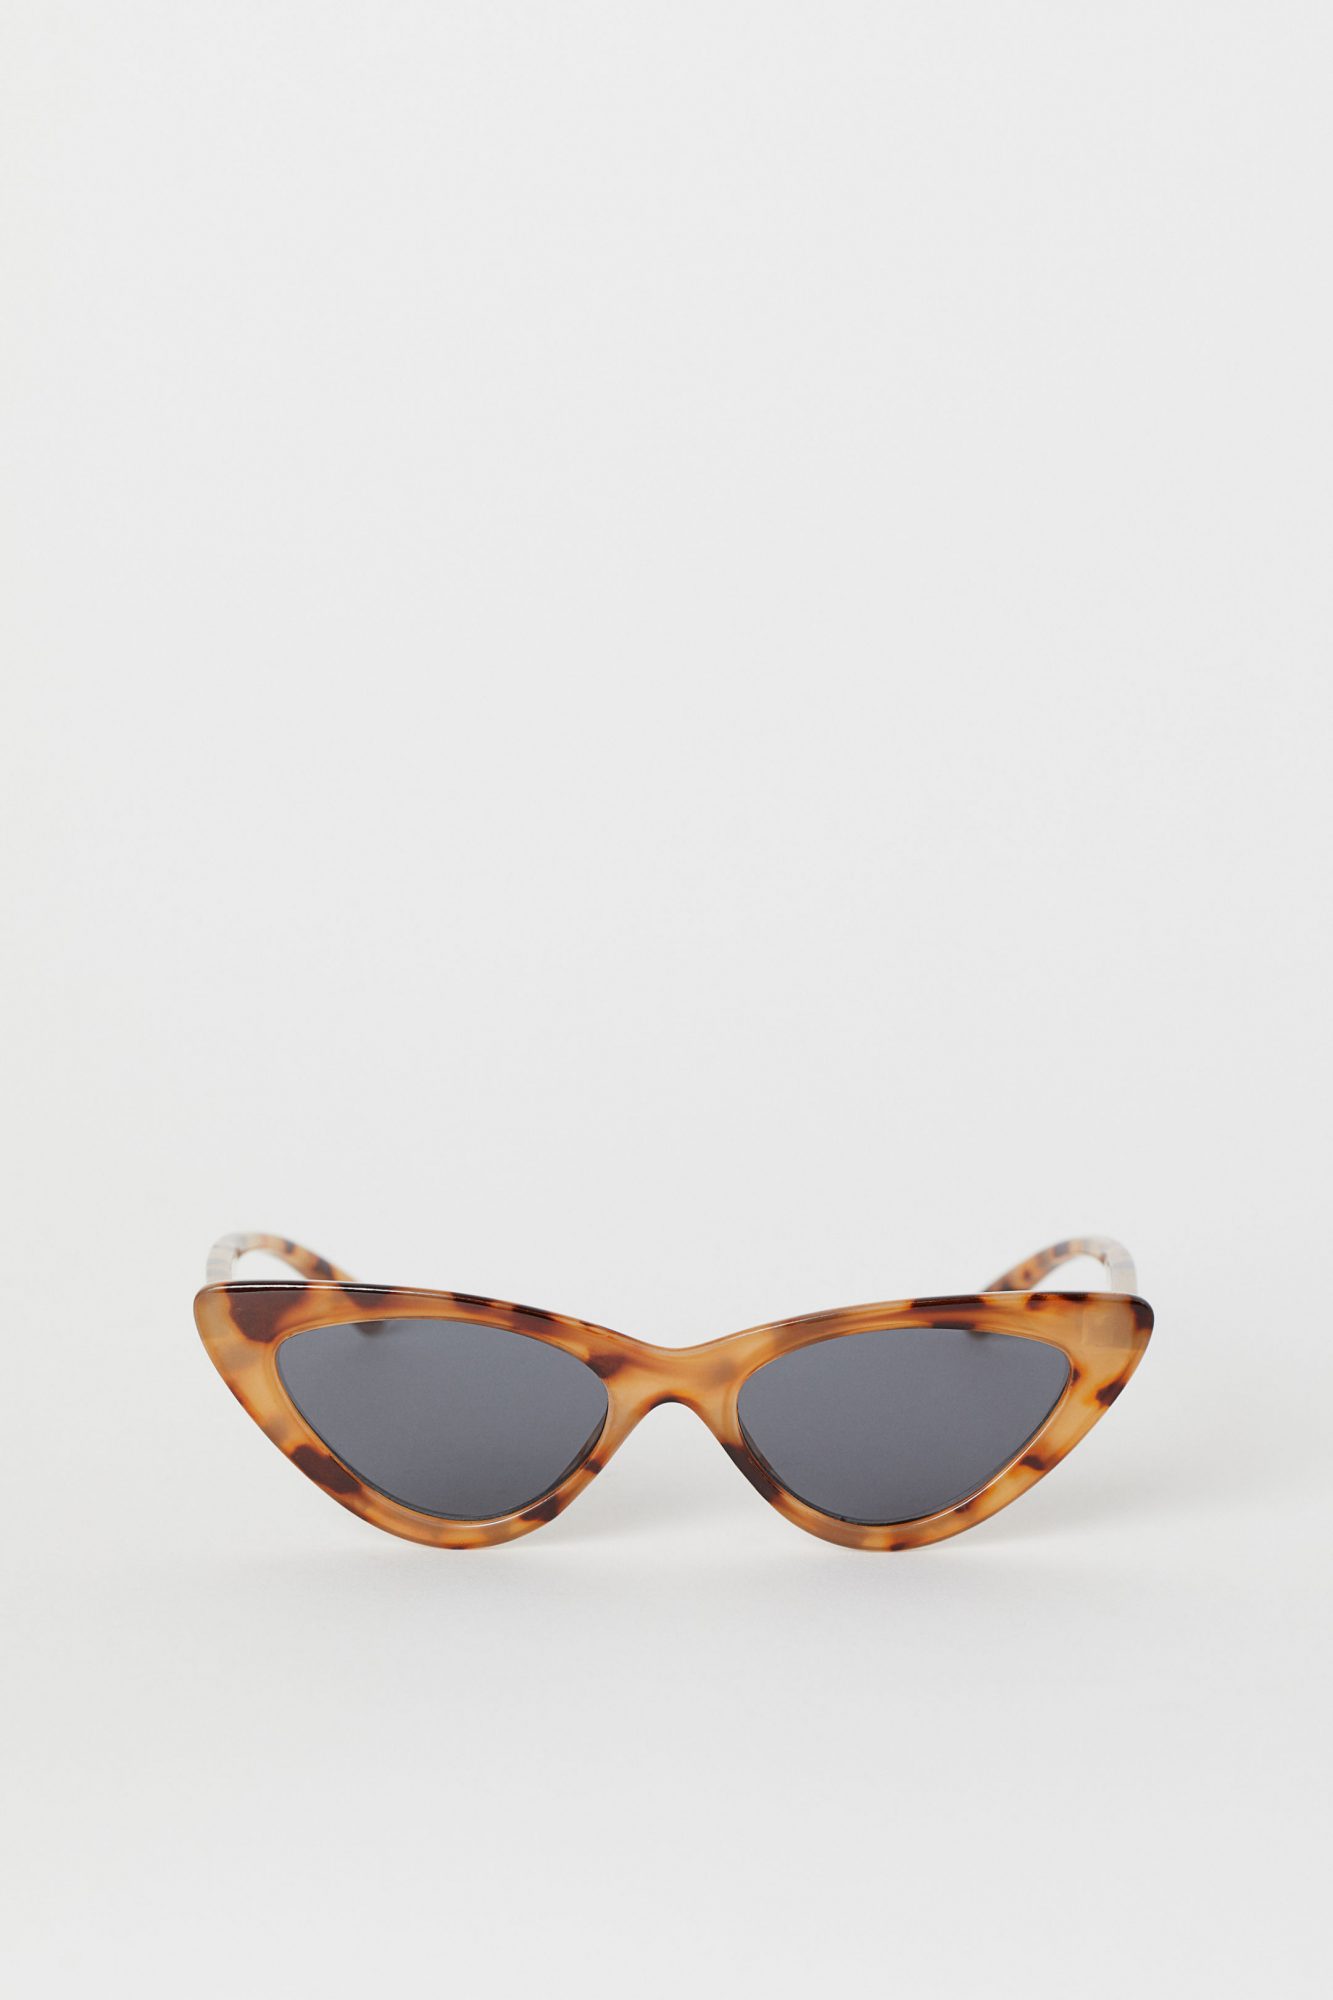 H&M cat-eye sunglasses